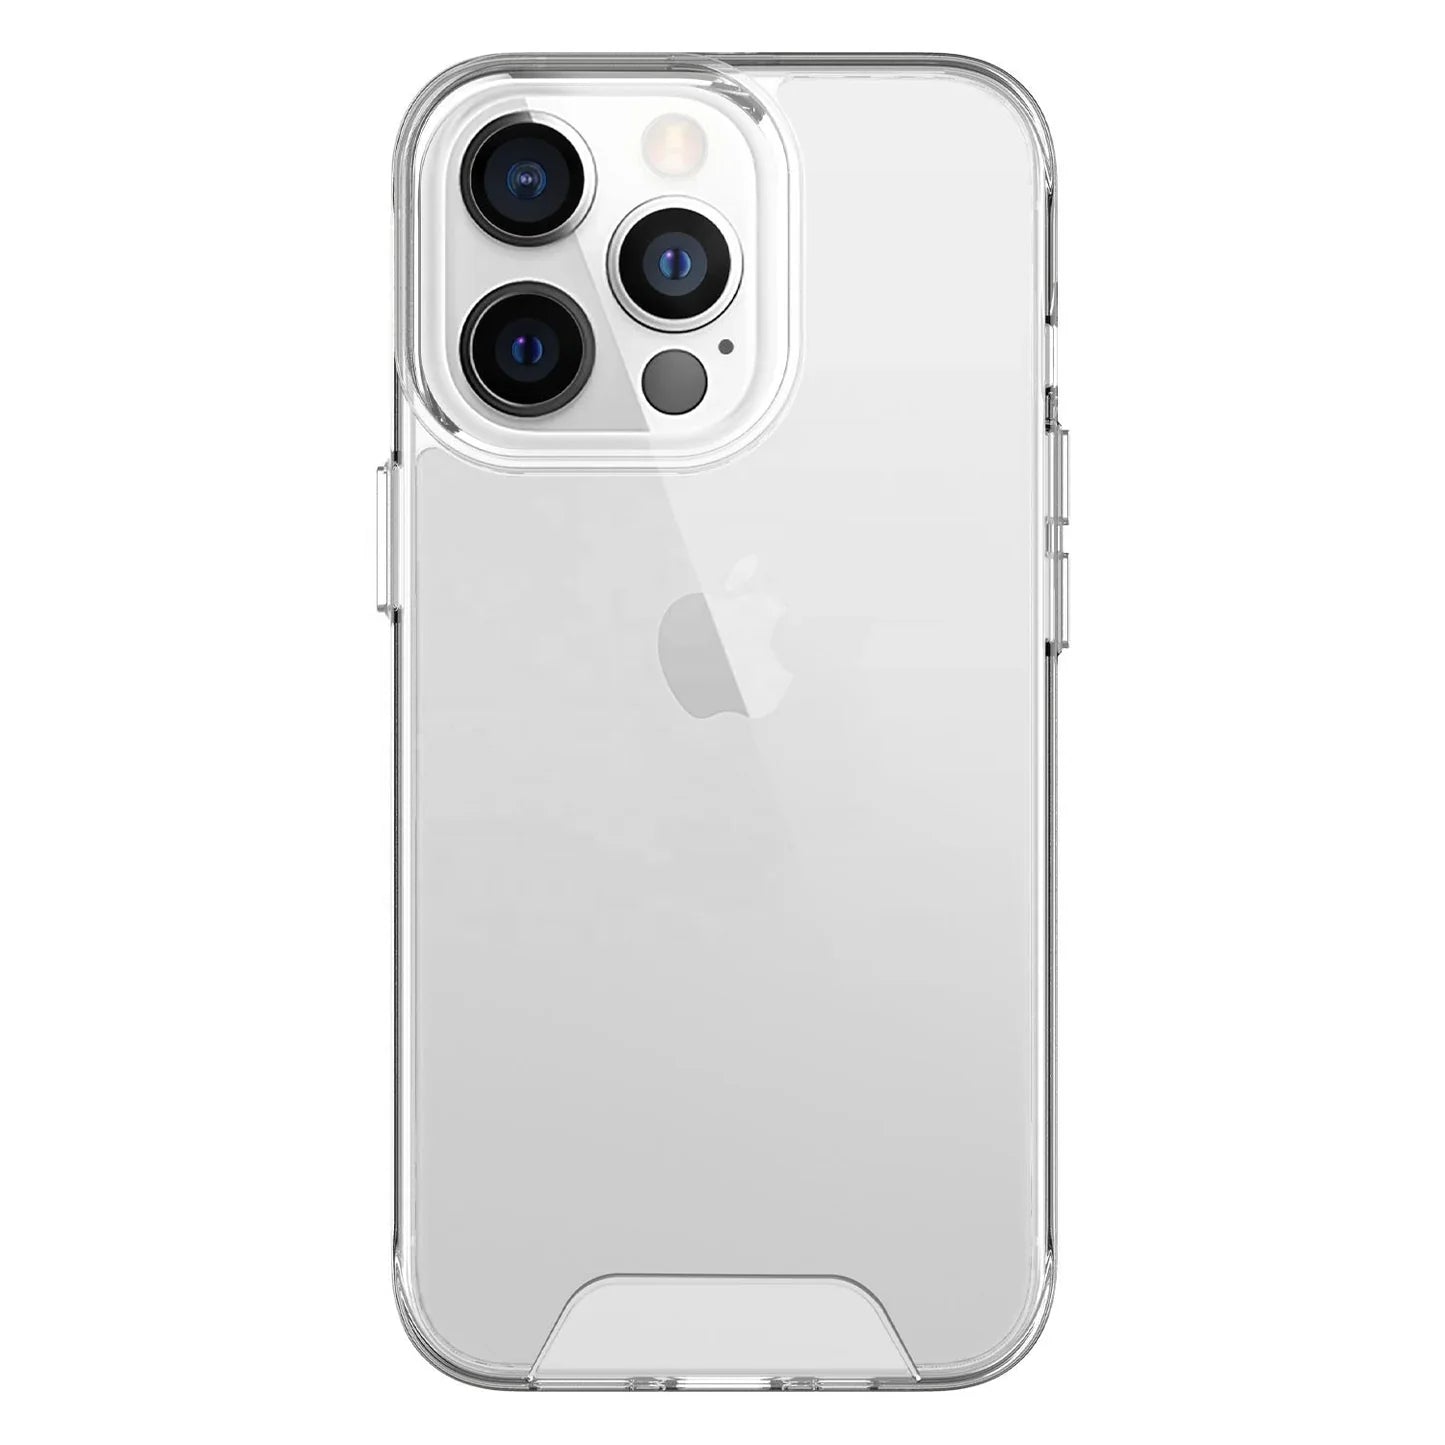 iPhone 11 Pro Max Transparent Case with Bump Camera Protection - Transparent